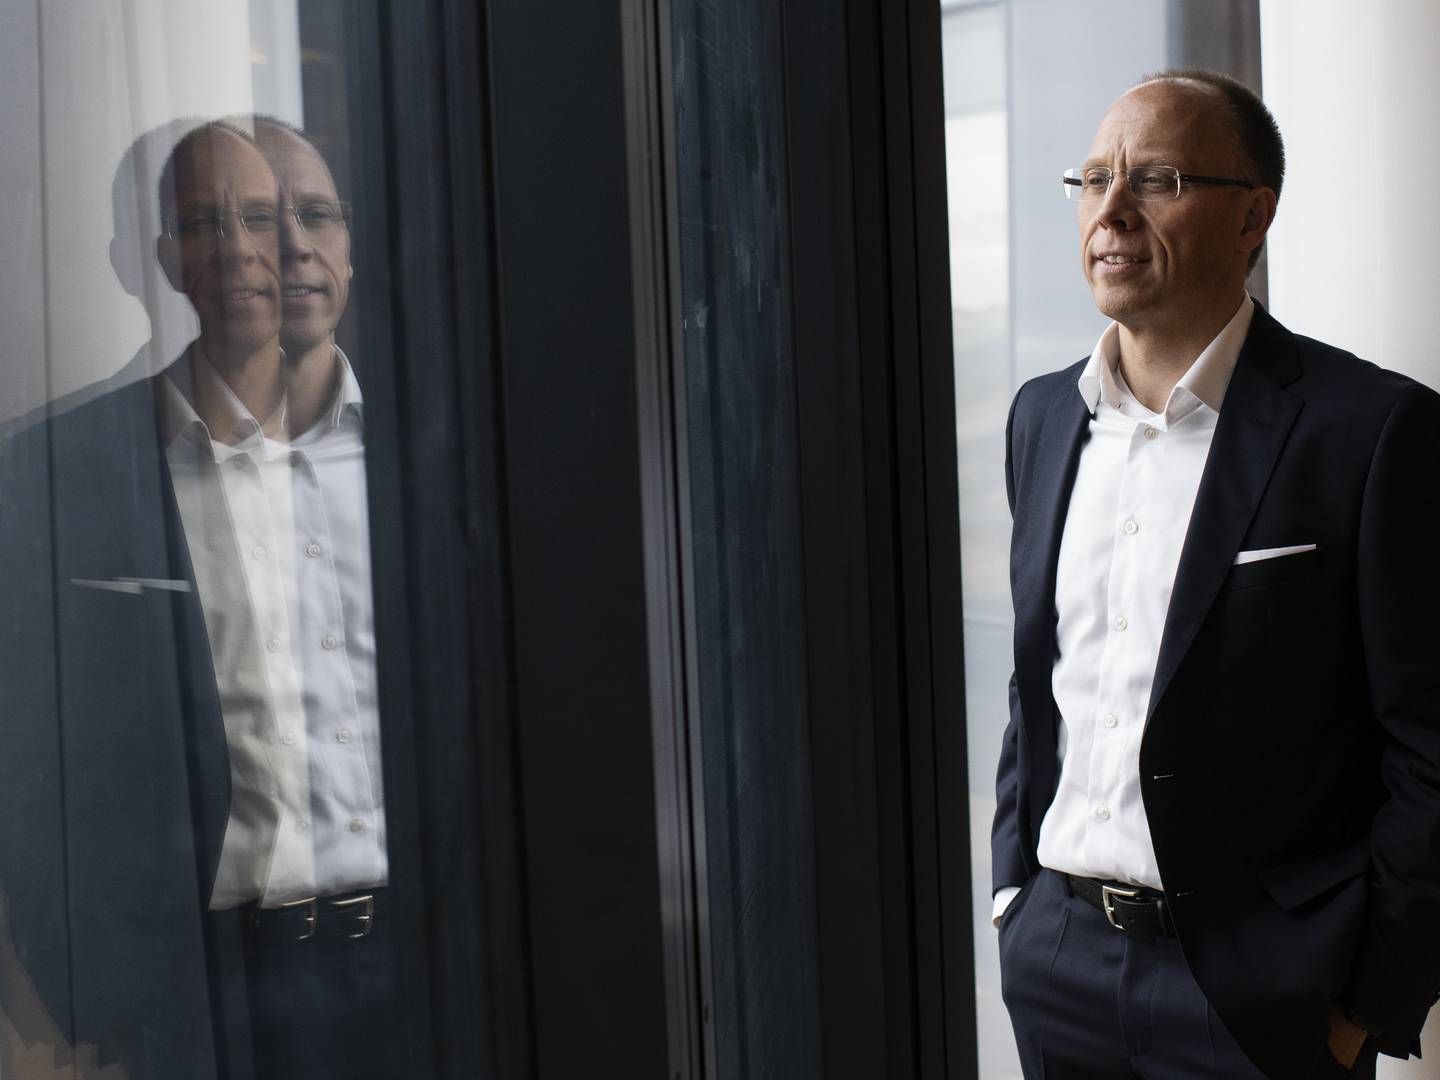 Frank Vang-Jensen, President and Group CEO of Nordea. | Photo: Nordea PR.